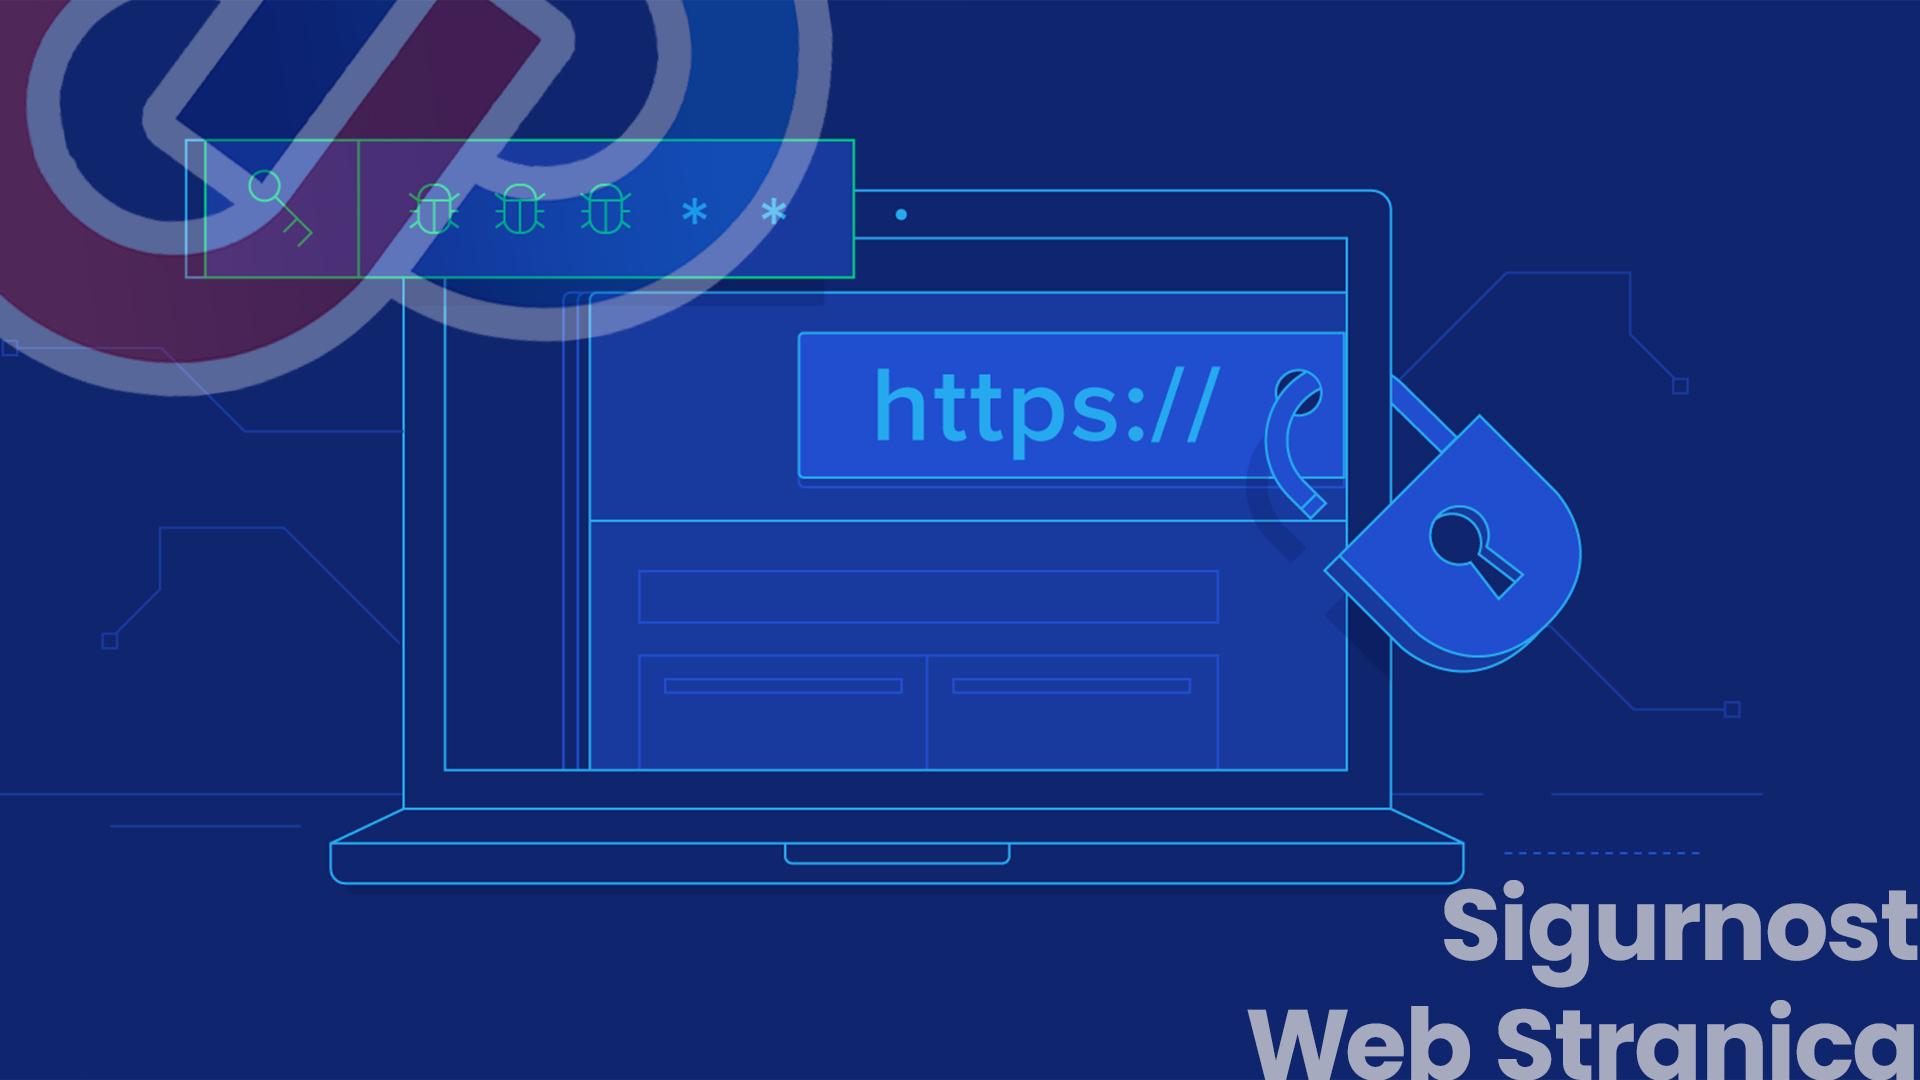 Amilma-Digital-Sigurnost-Web-Stranica